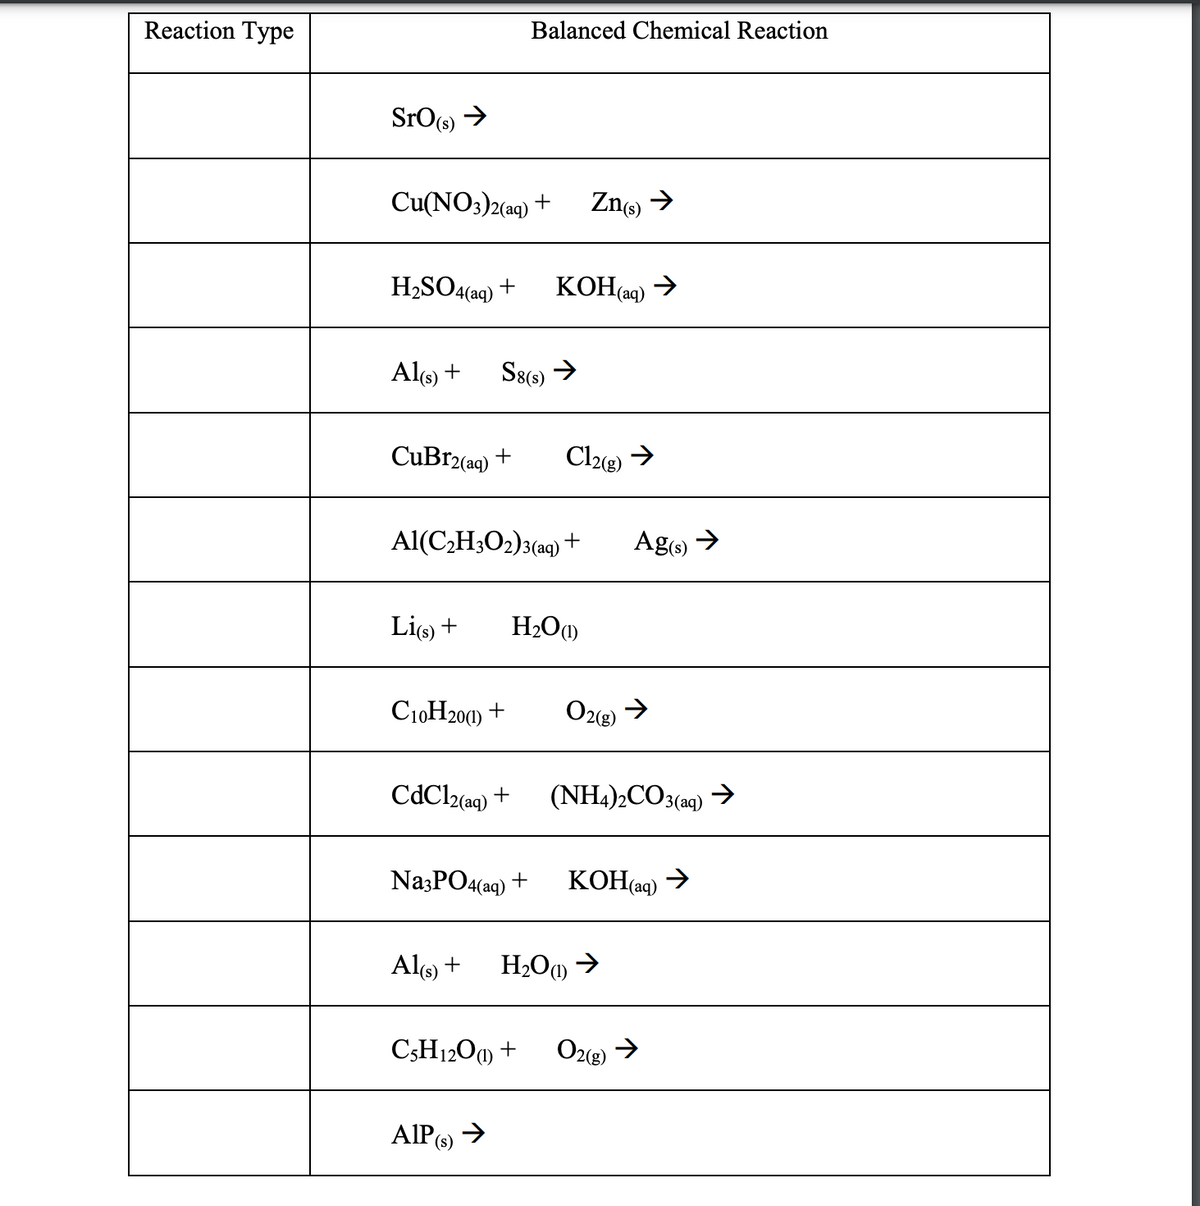 Reaction Type
Balanced Chemical Reaction
SrO(s) >
Cu(NO;)2(a9) +
Zn6) →
H2SO4(aq) +
КОНа)
Als) +
S8() →
CuBr2(ag) +
Cl2(2) →
Al(C,H;O2)3(ag) +
Ag) >
Lis) +
H2OM)
C10H201) +
O2g)
CdCl2(aq) +
(NH4)2CO3(aq)
Na3PO4(aq) +
KOH(aq) →
Al6) +
H2O@ >
C3H12O0) +
O2(g) →
(1)
AlP(s) >
